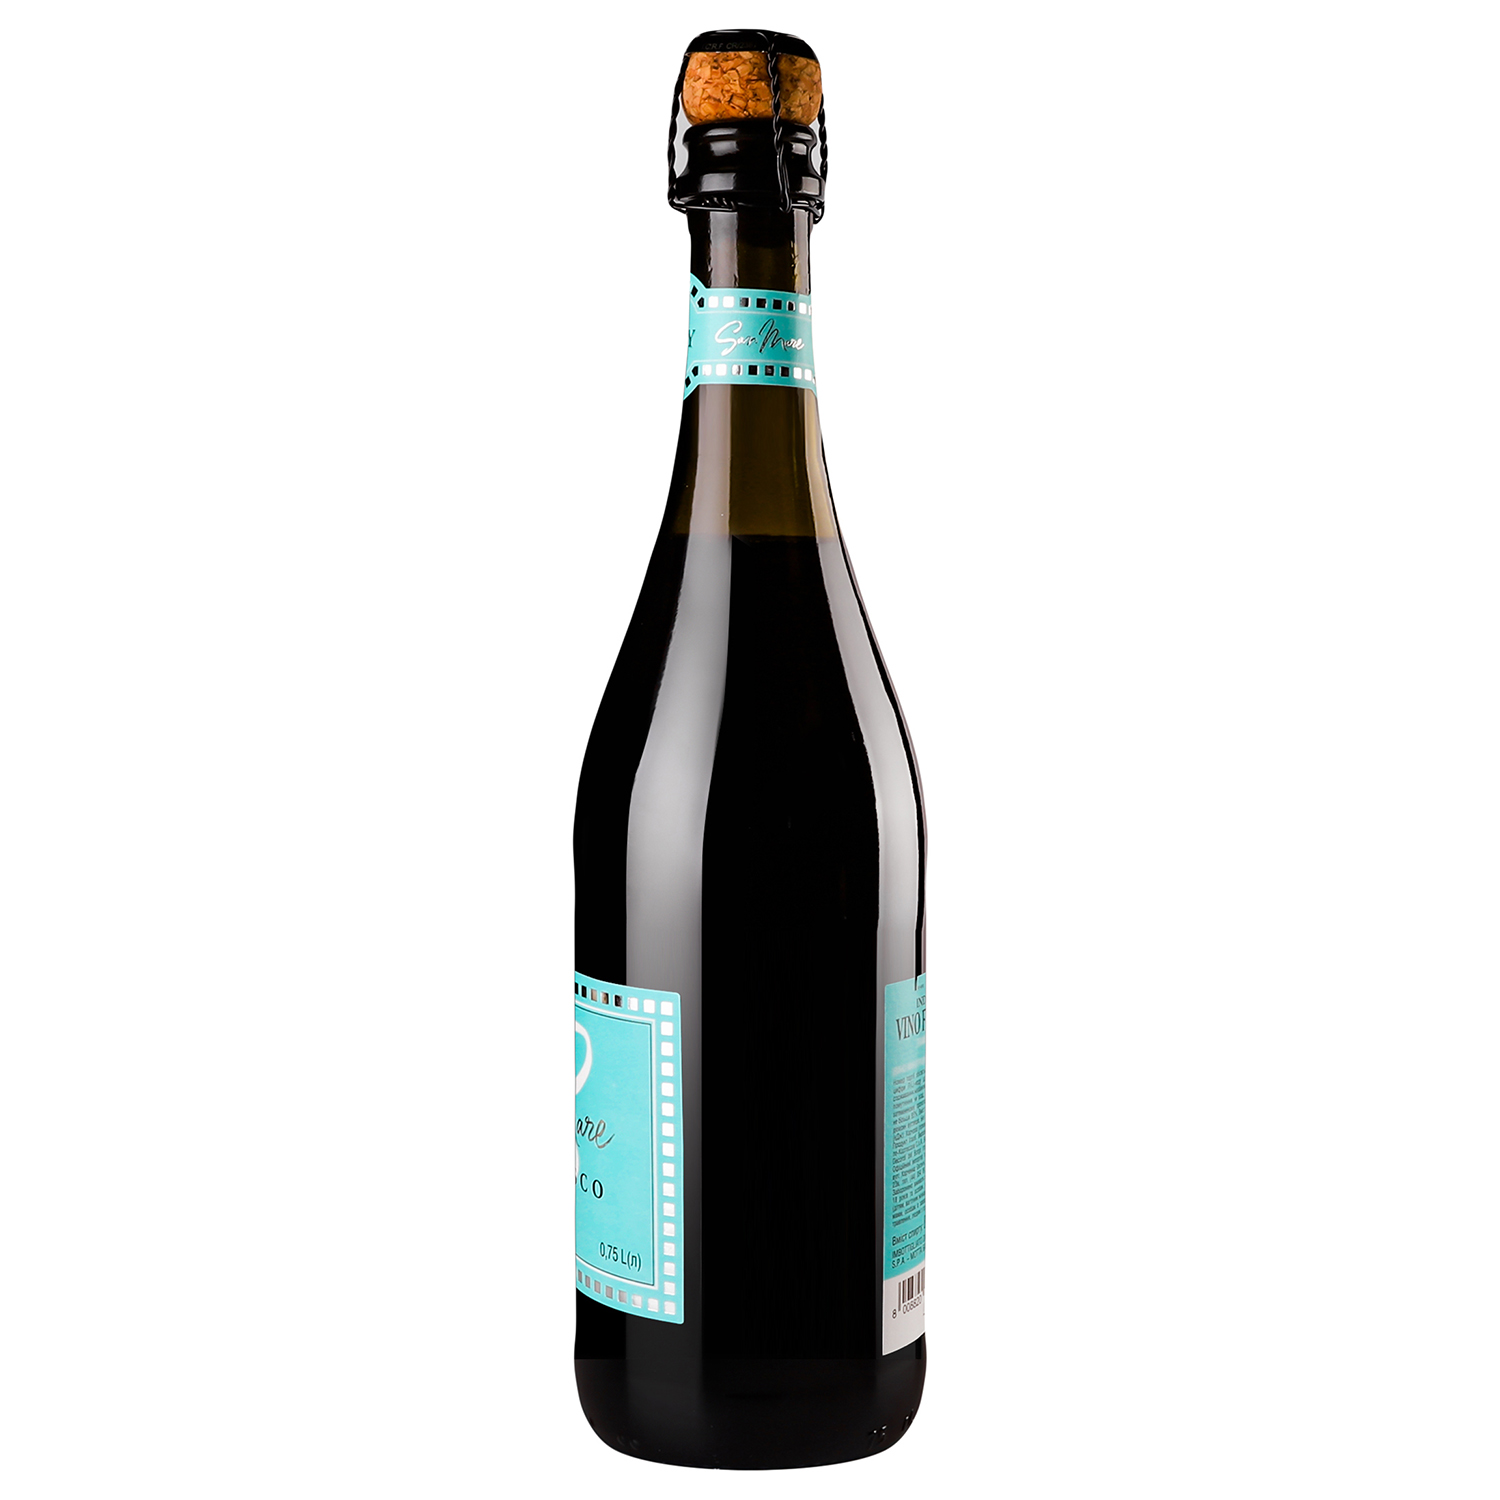 Вино игристое San Mare Lambrusco dell'Emilia Rosso, красное, полусладкое, 8%, 0,75 л - фото 2